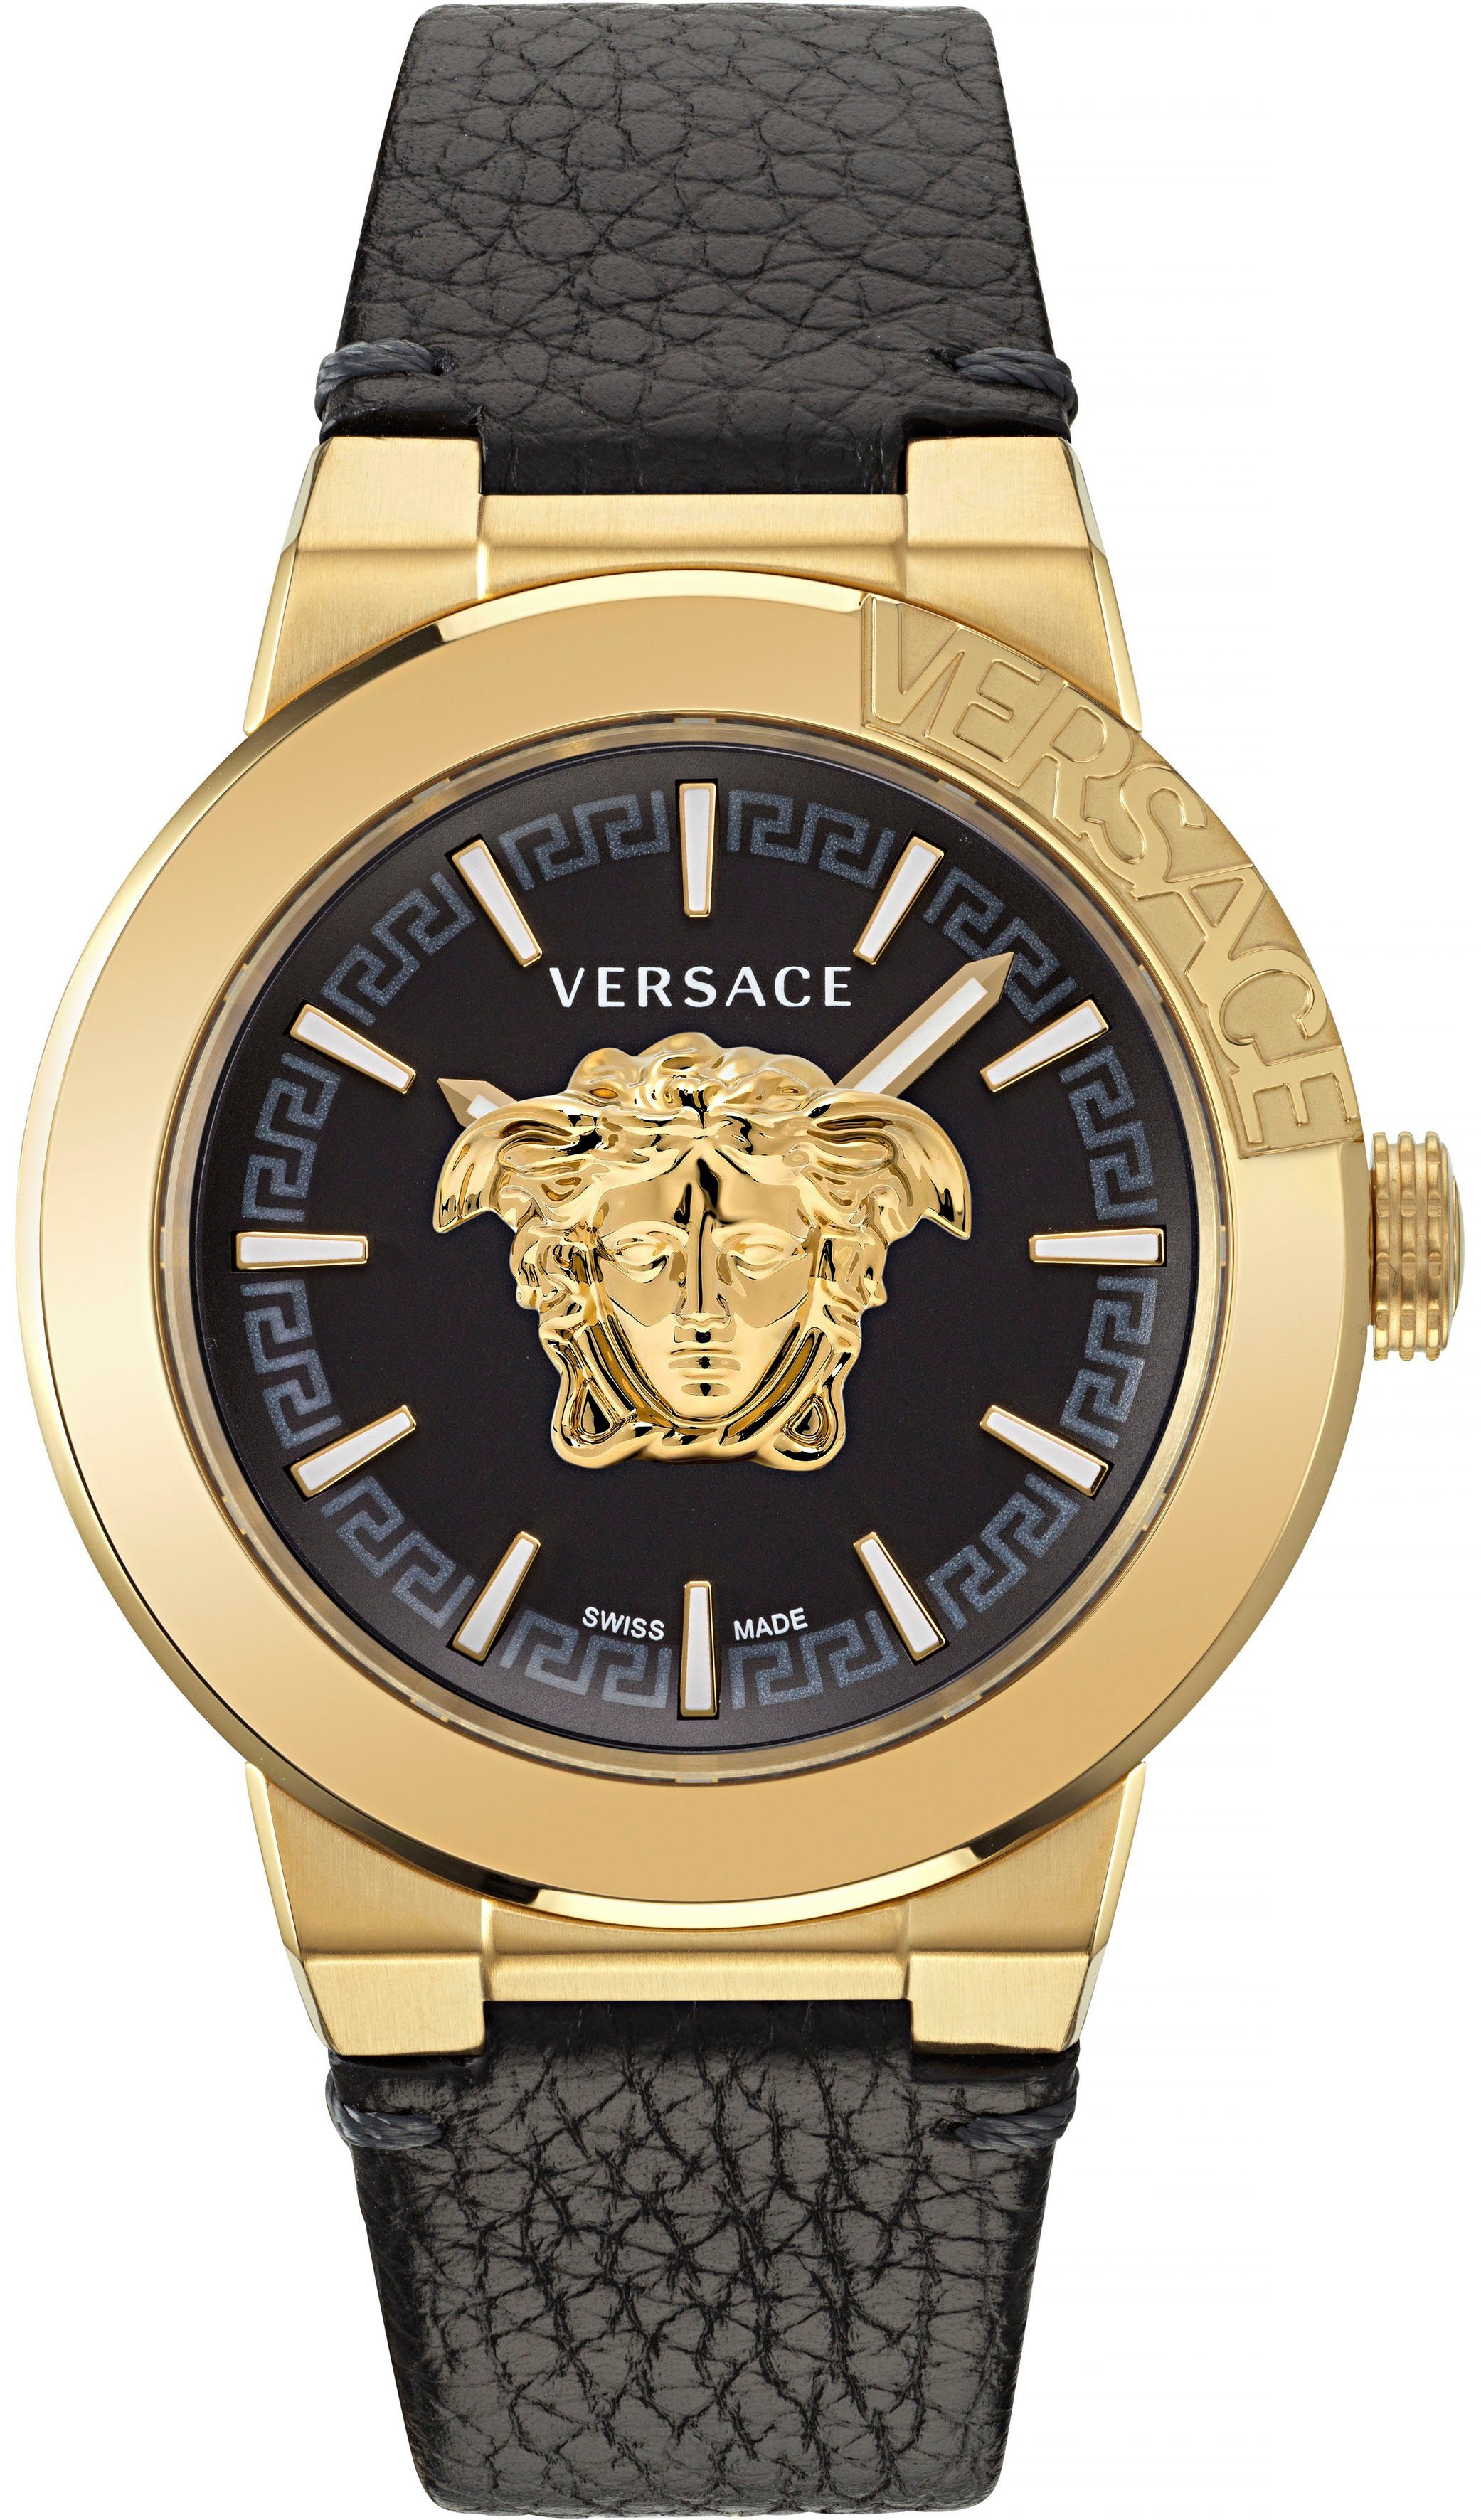 Versace Quarzuhr MEDUSA INFINITE GENT, VE7E00223, Armbanduhr, Herrenuhr, Swiss Made, Leuchtzeiger, Saphirglas, analog